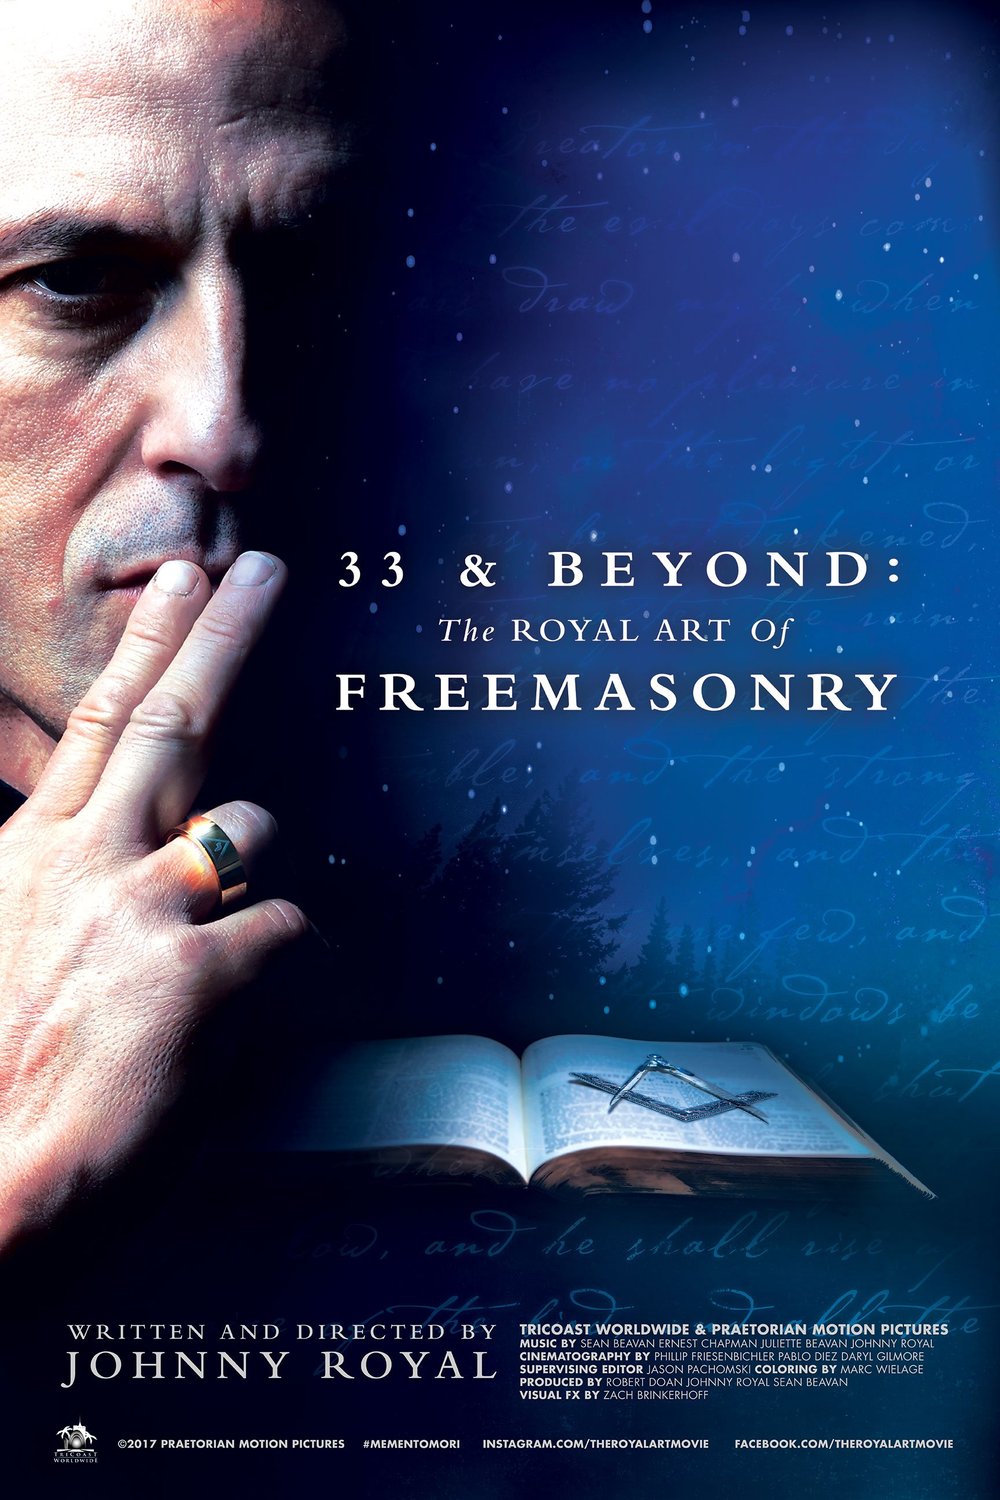 Poster of the movie 33 & Beyond: The Royal Art of Freemasonry